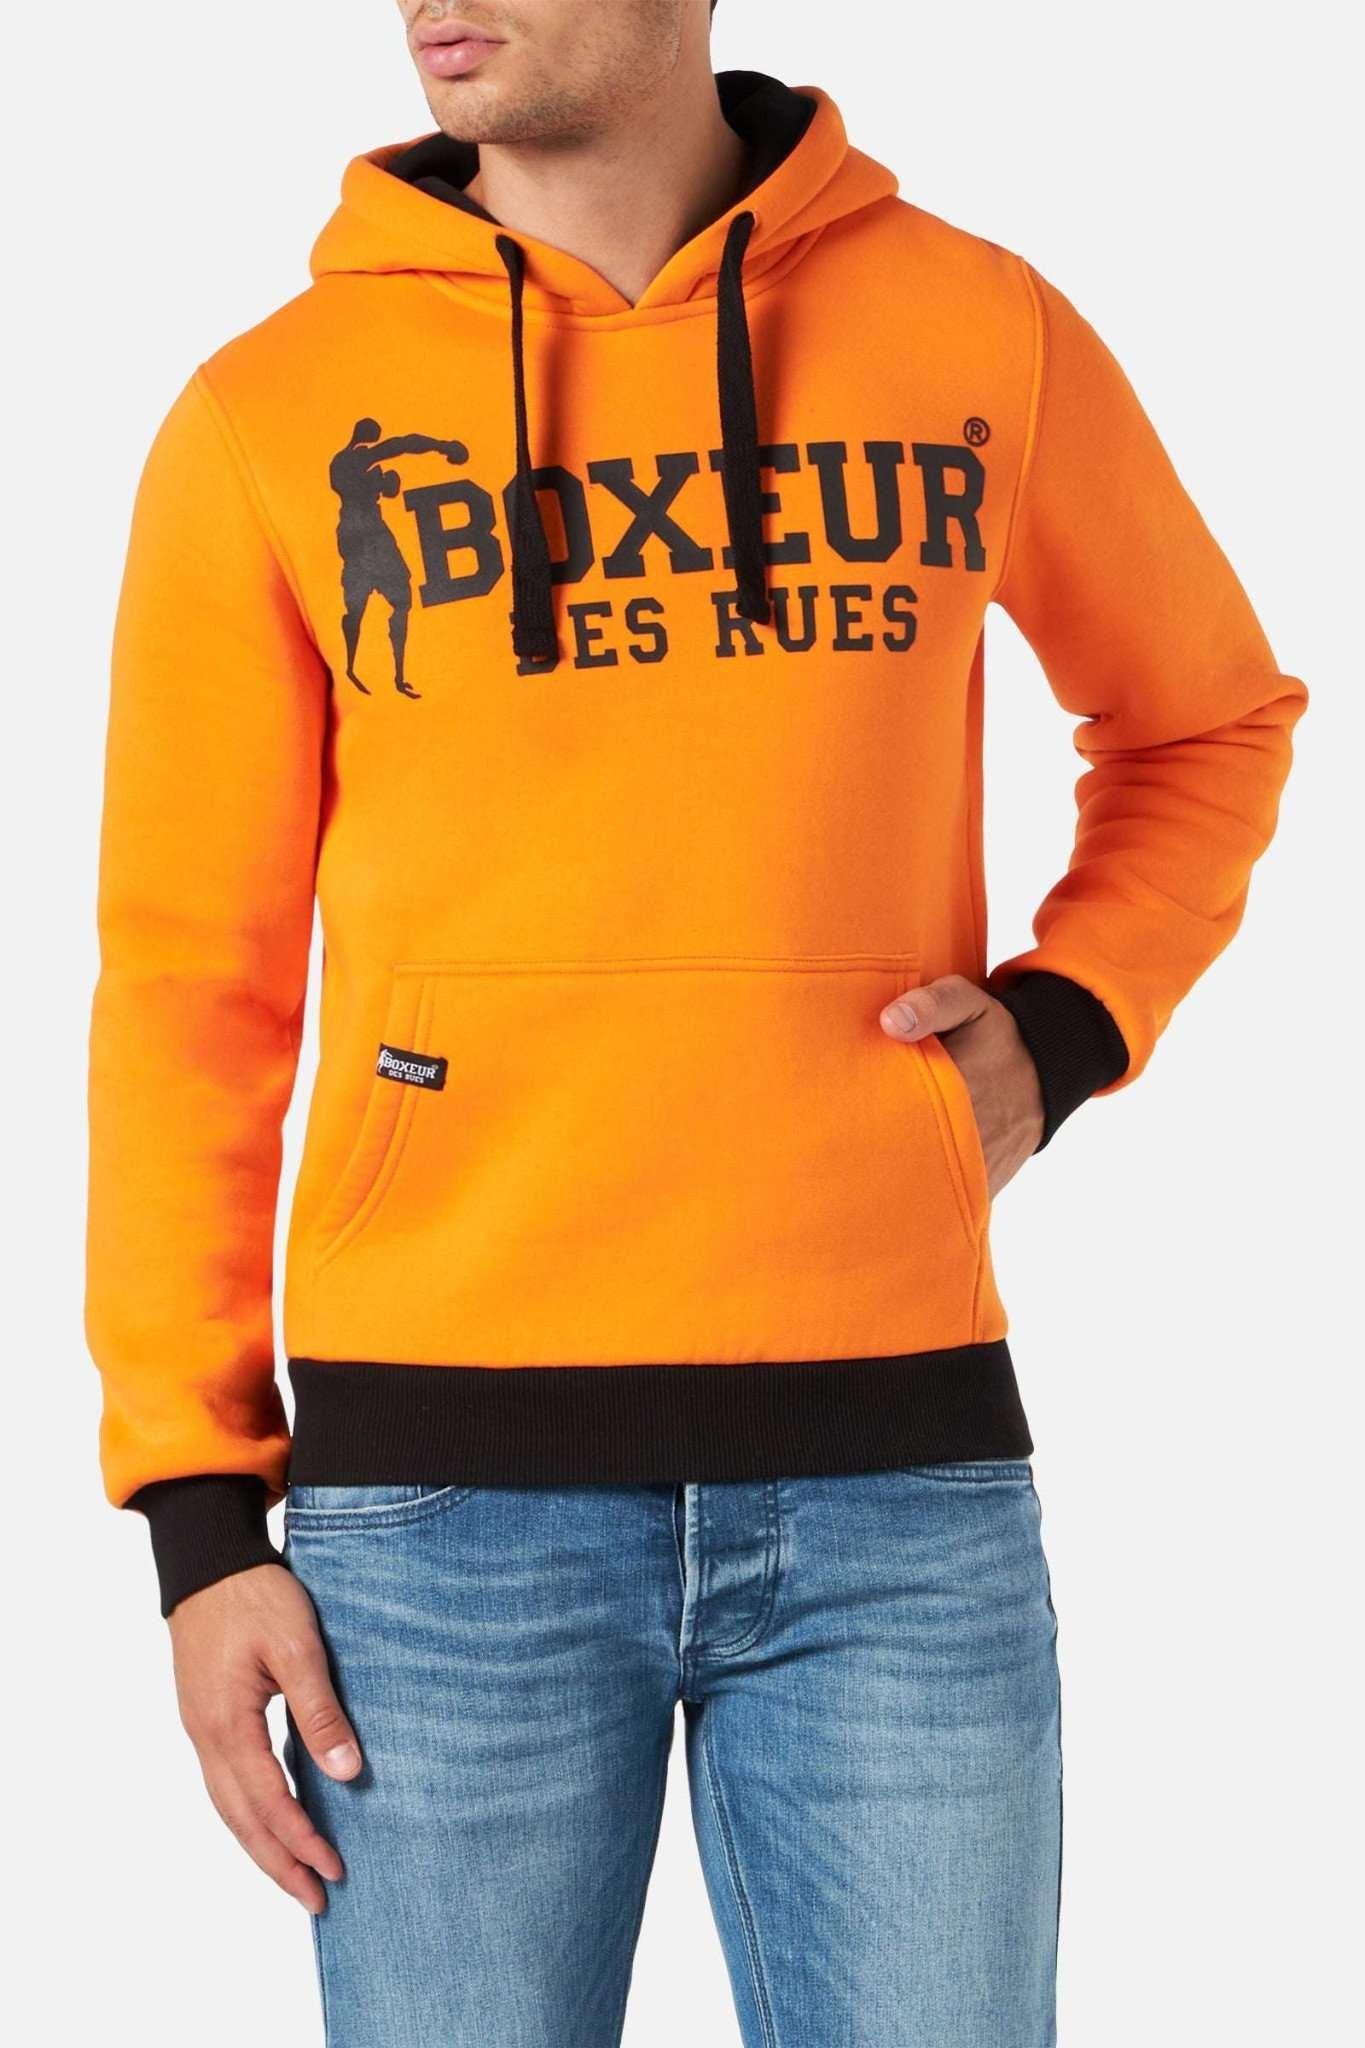 Sweatshirts Man Hoodie Sweatshirt Herren Orange S von BOXEUR DES RUES